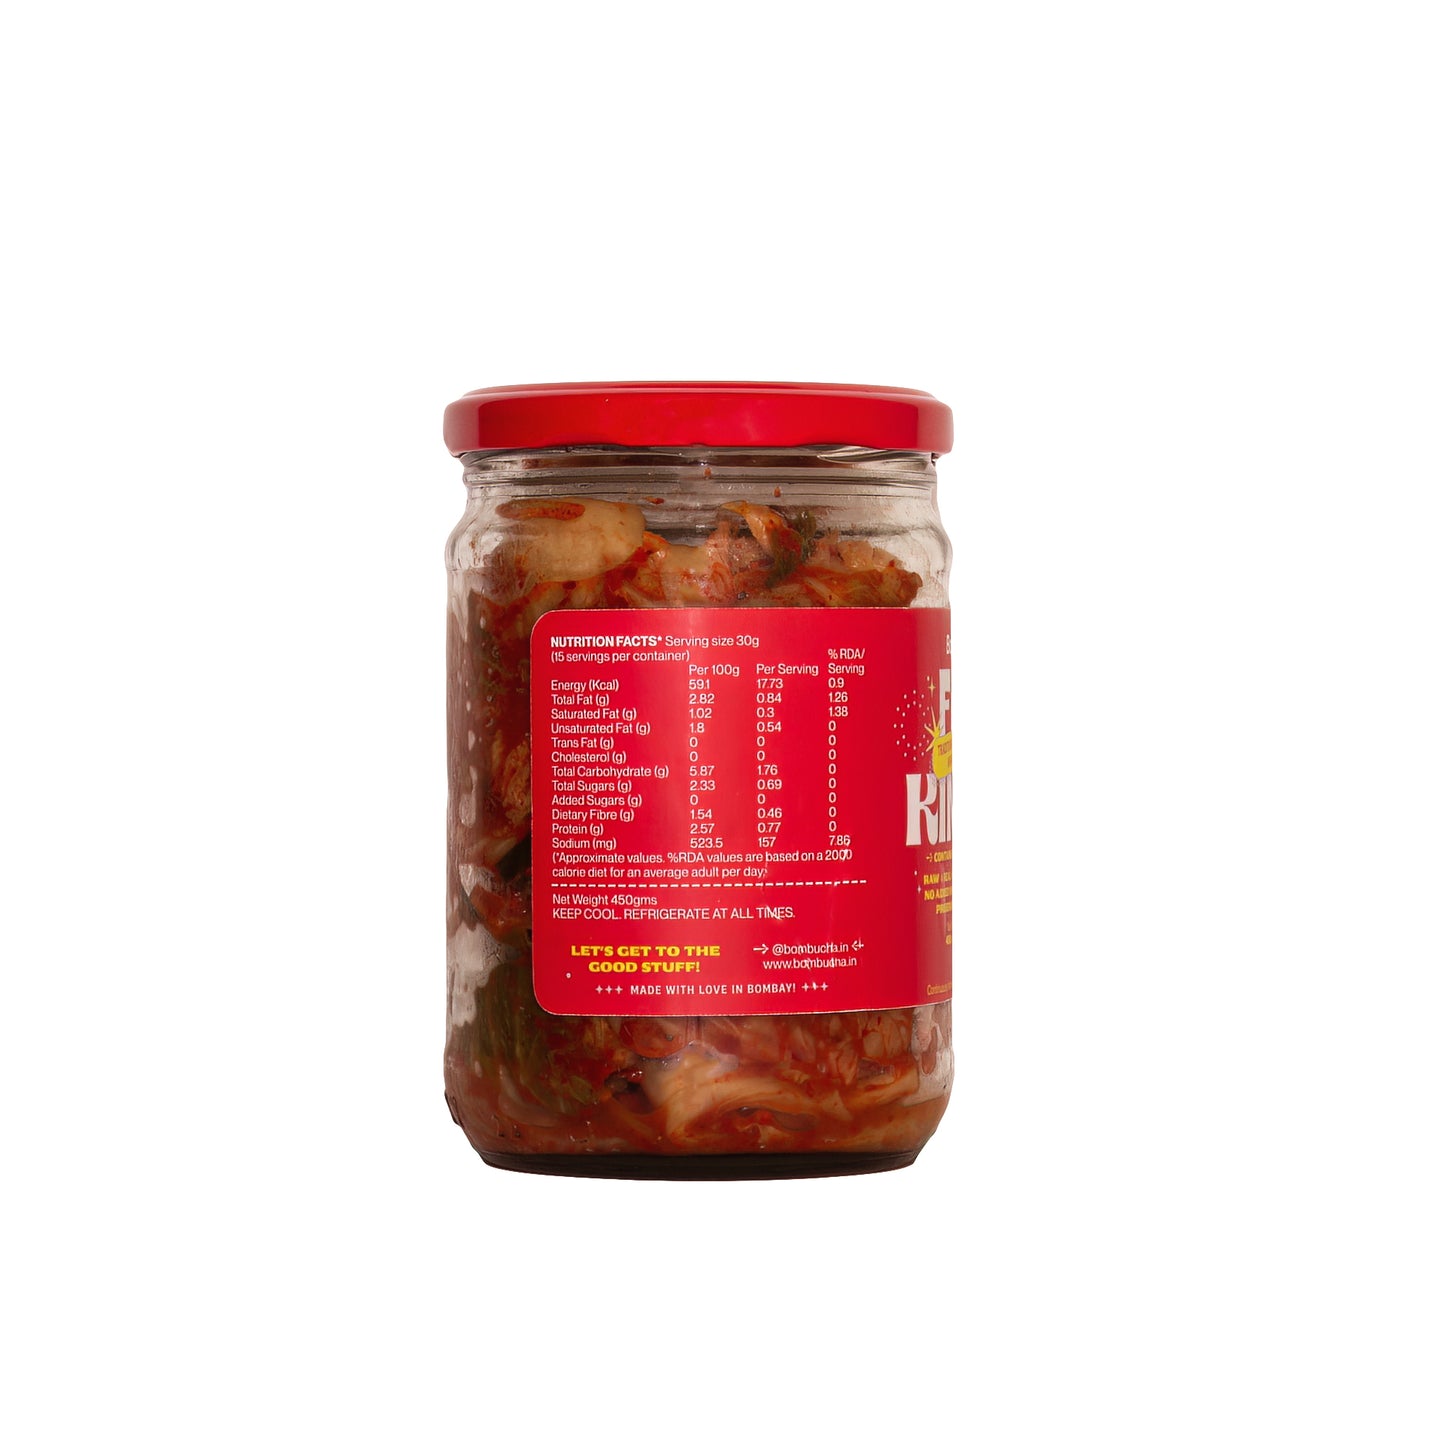 Kimchi - Fire 450 gm